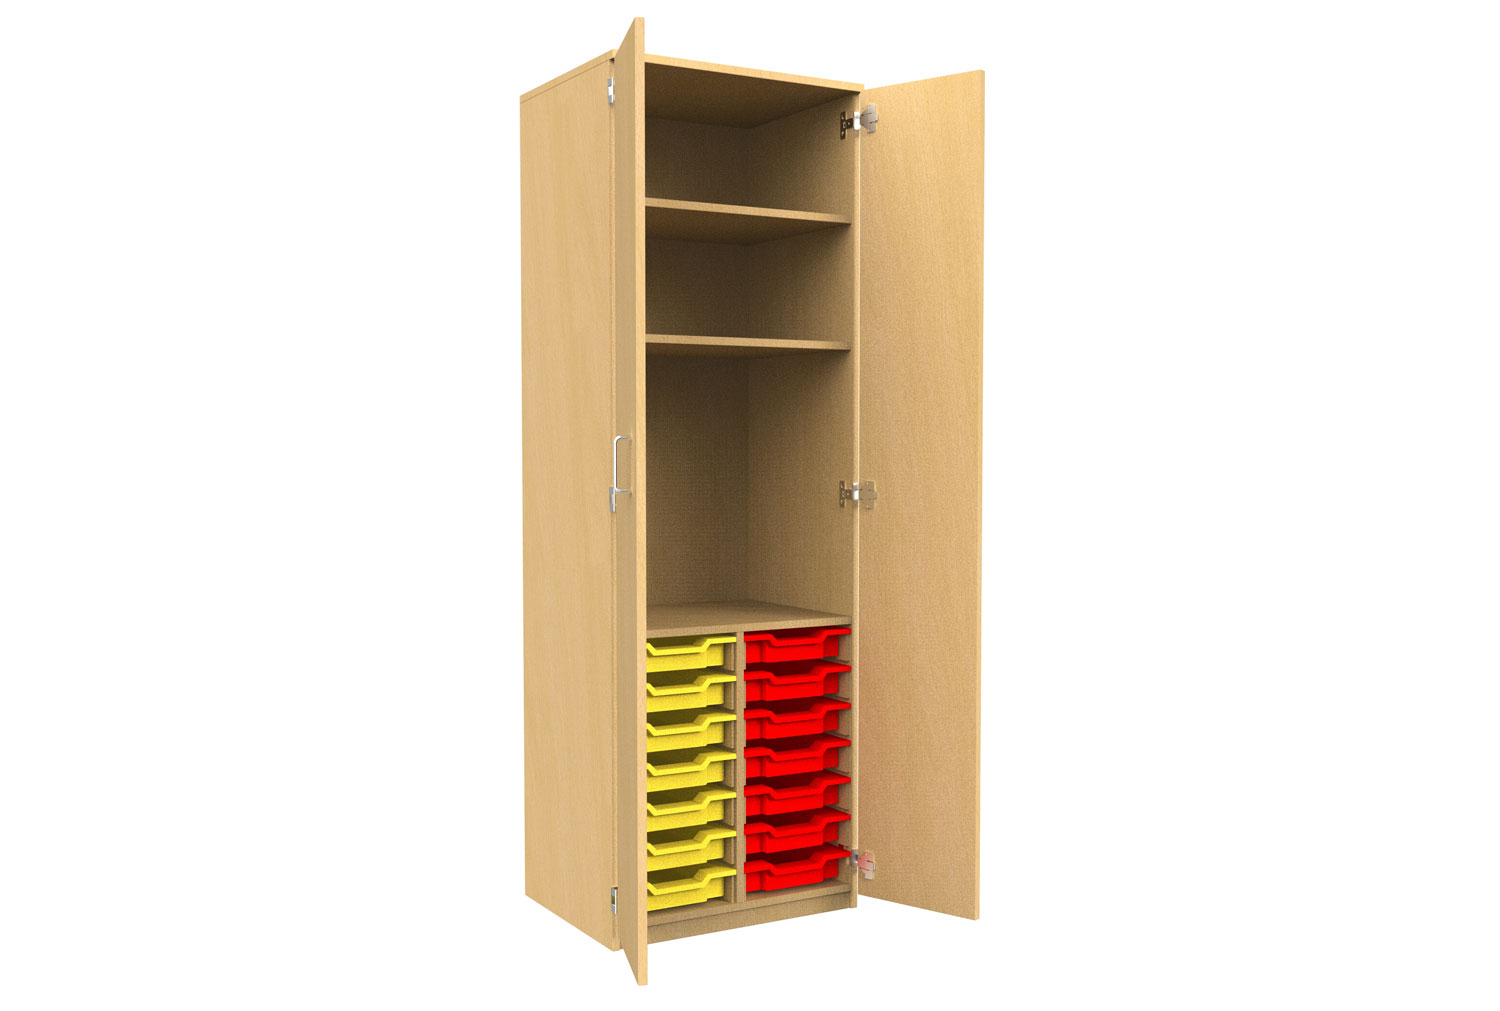 Tall Tray Storage 2 Shelf Classroom Cupboard With Full Doors, 21 Trays - 102wx49dx186h (cm), Beech Body/ Blue Trays